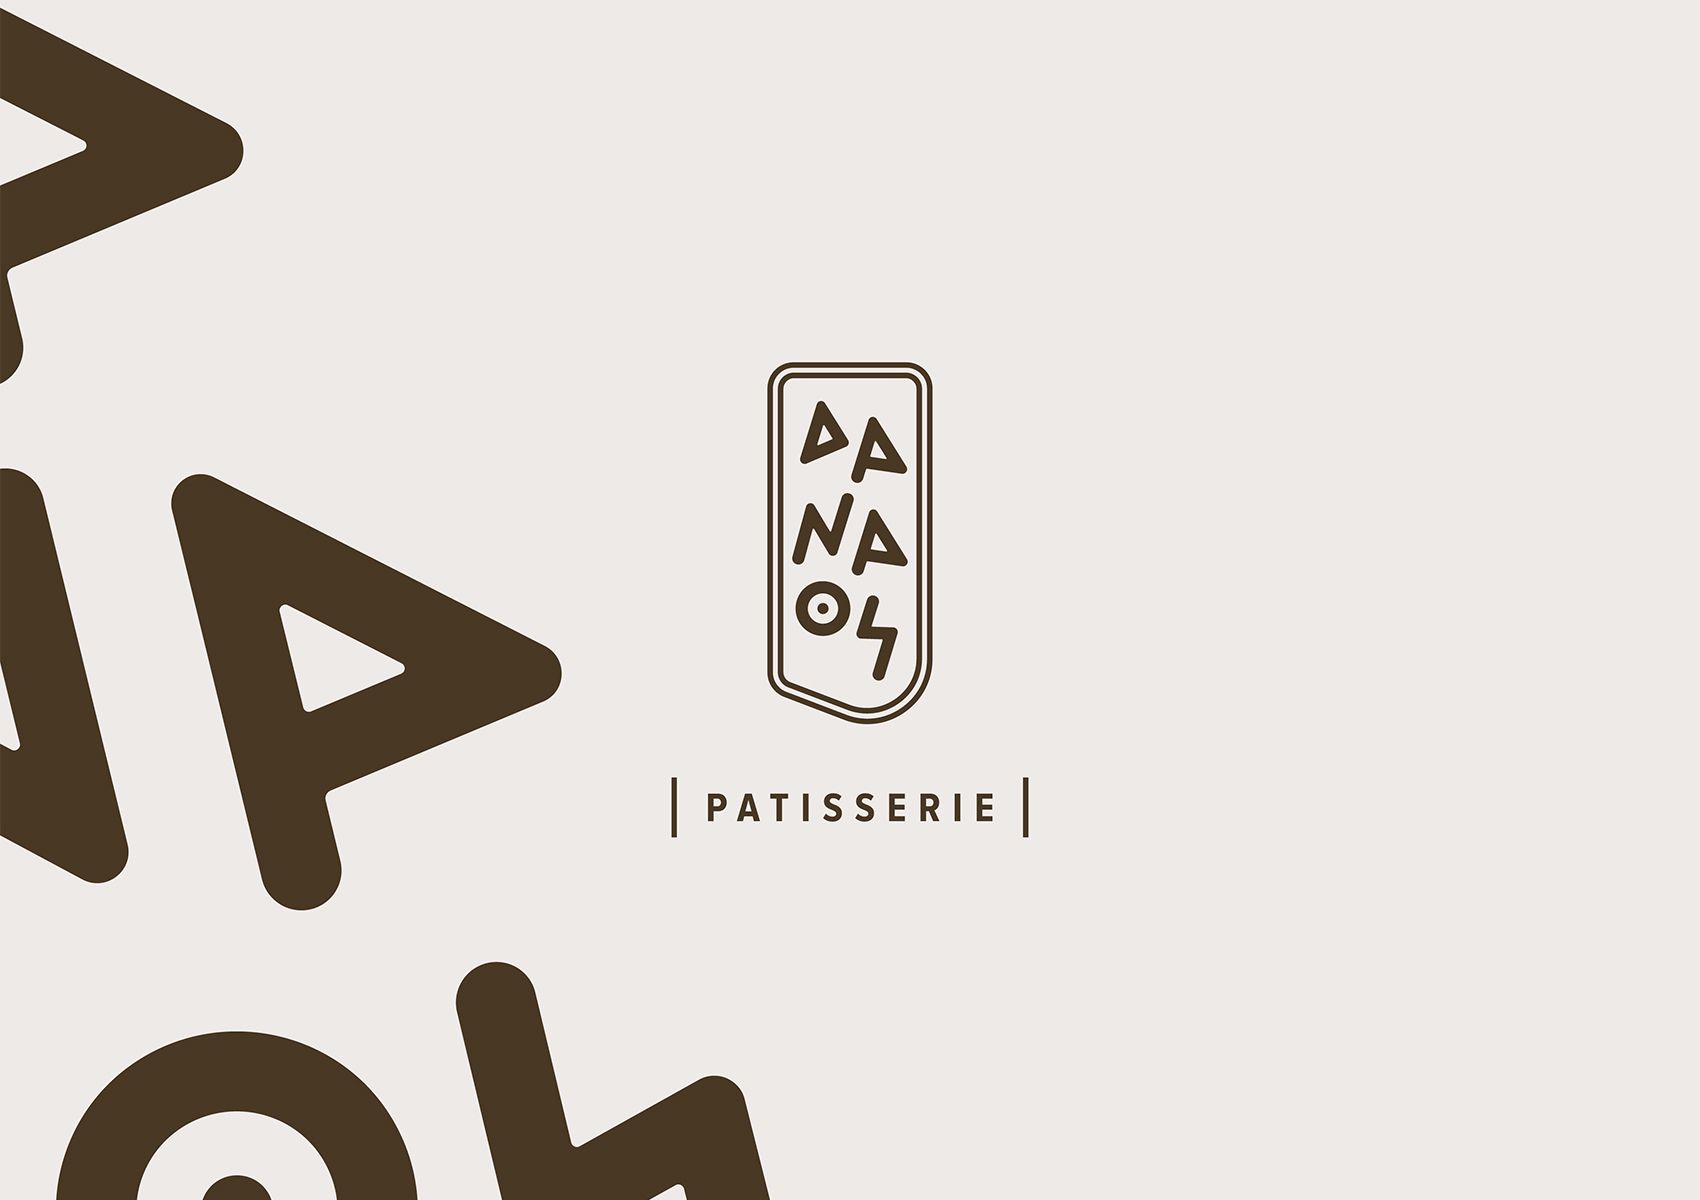 Danaos Patisserie logo artwork 1700x1200 by xhristakis